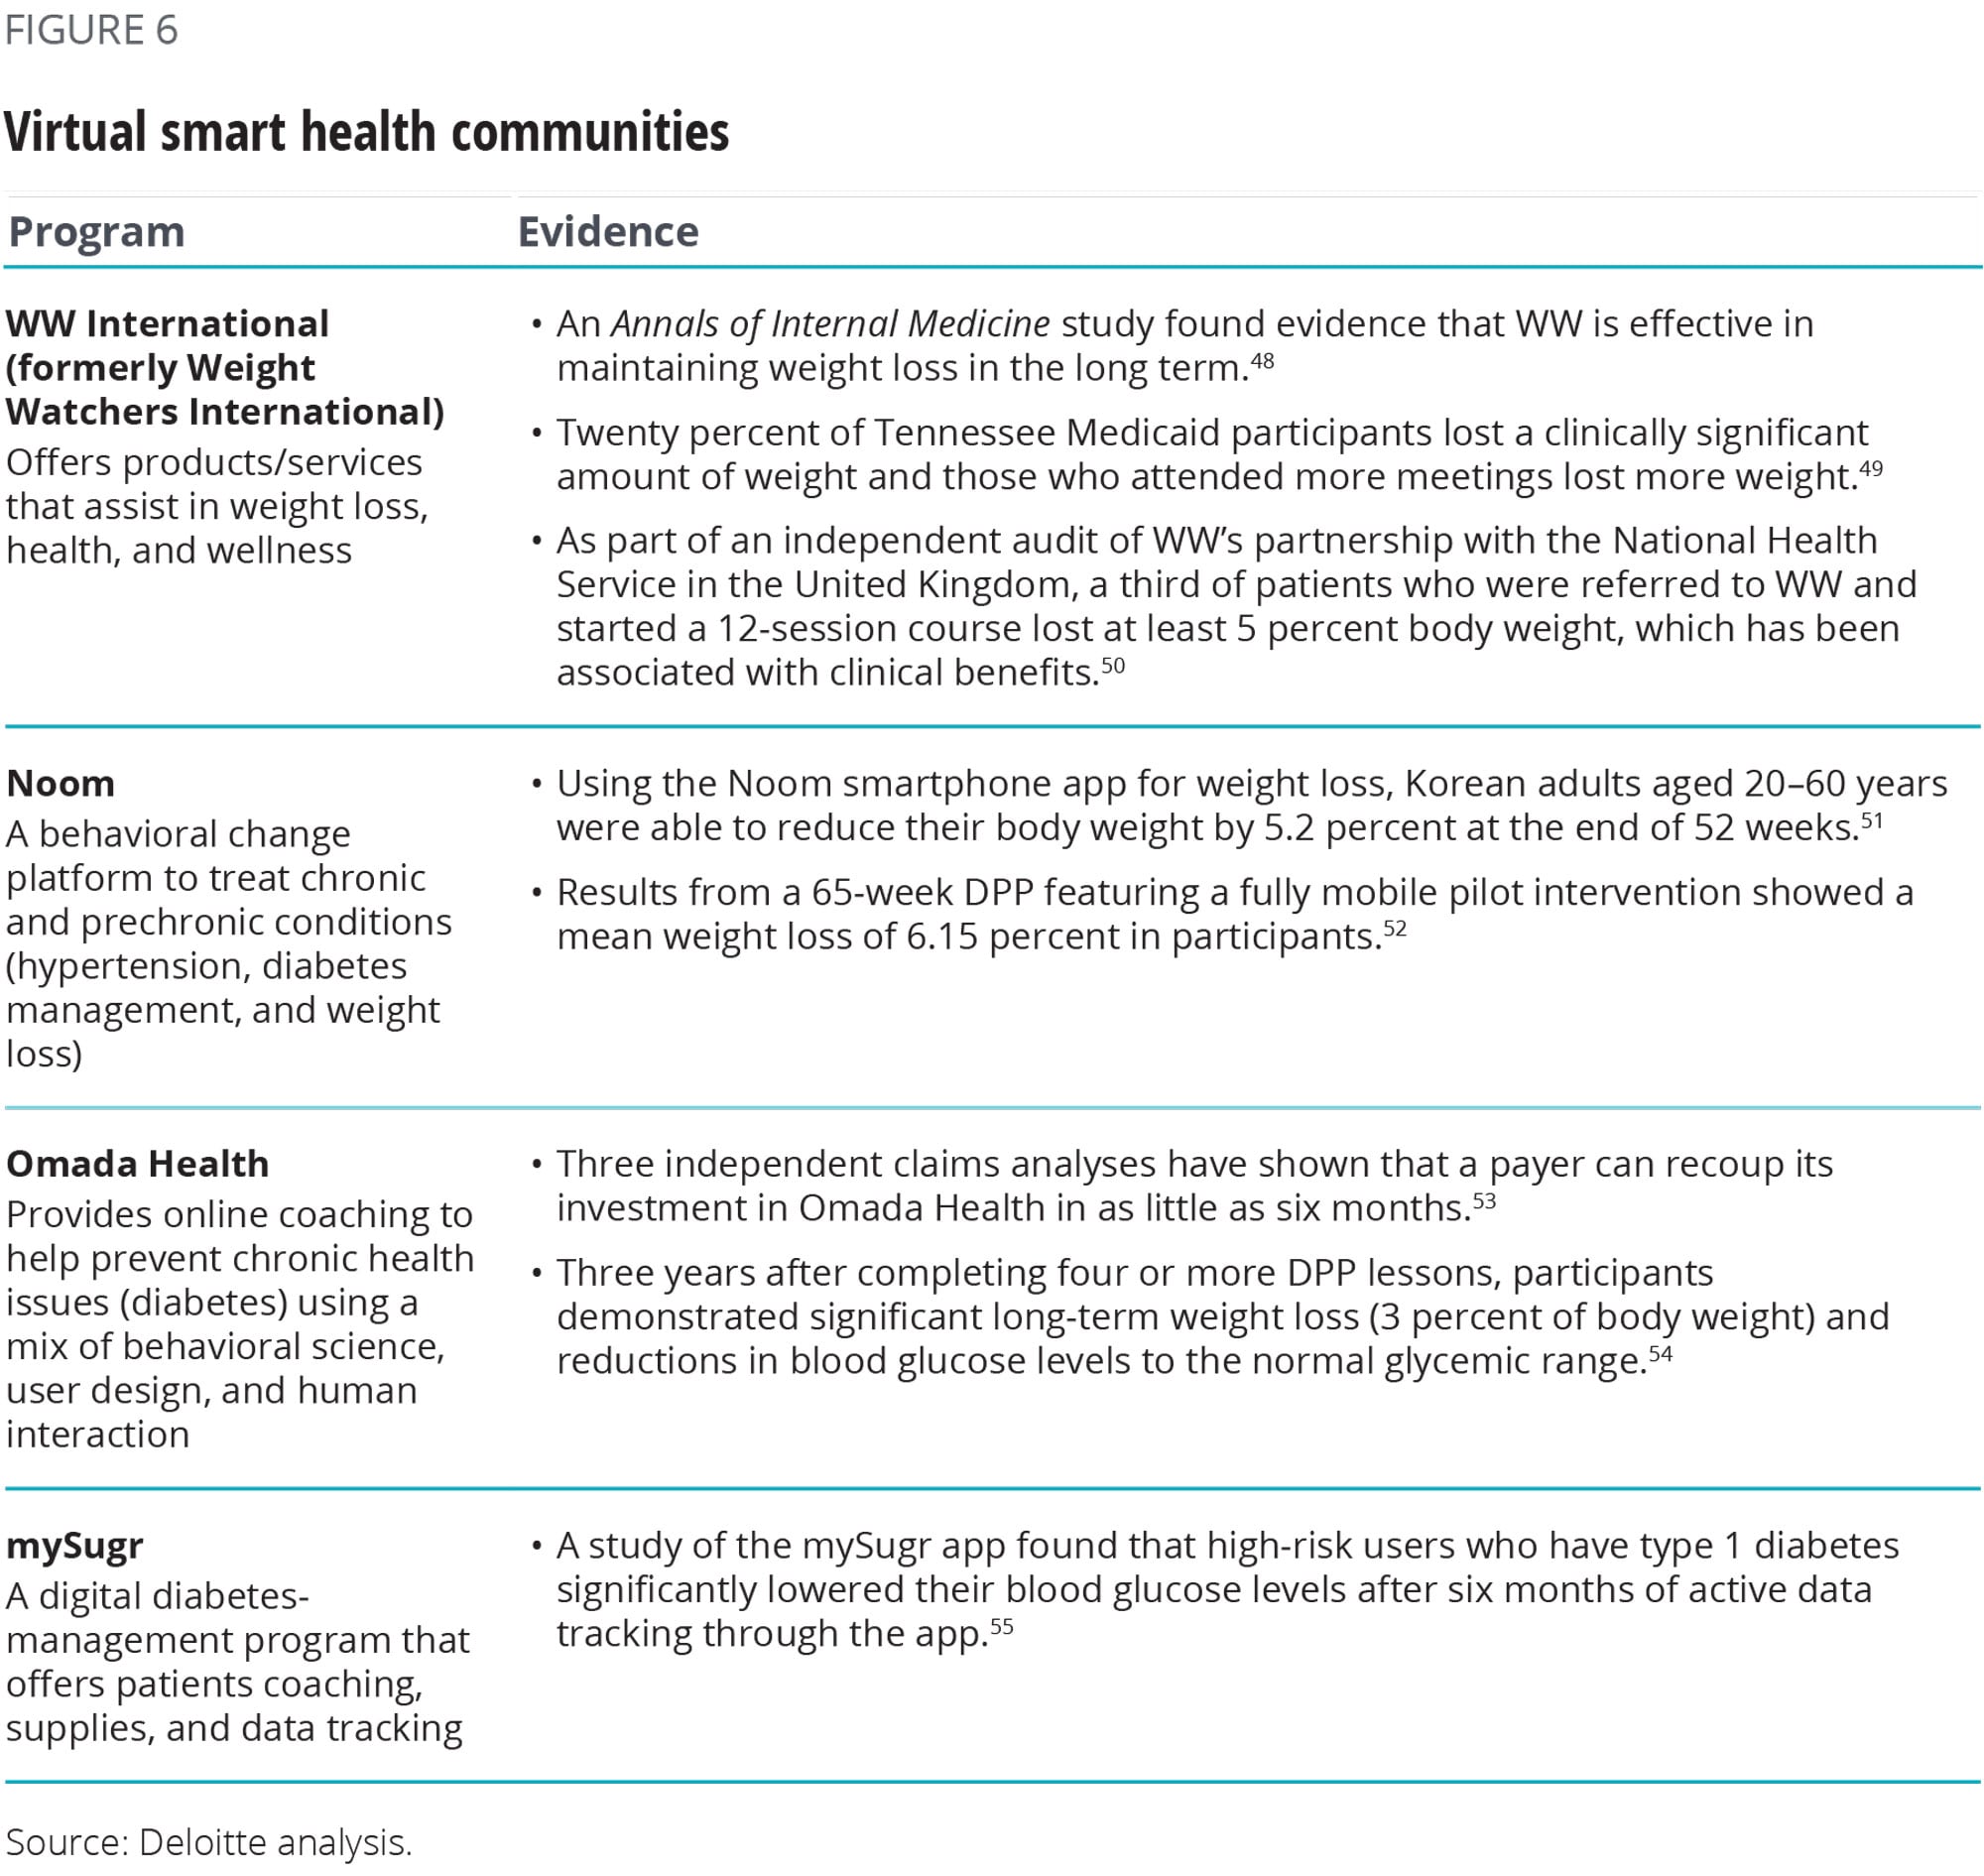 Virtual smart health communities